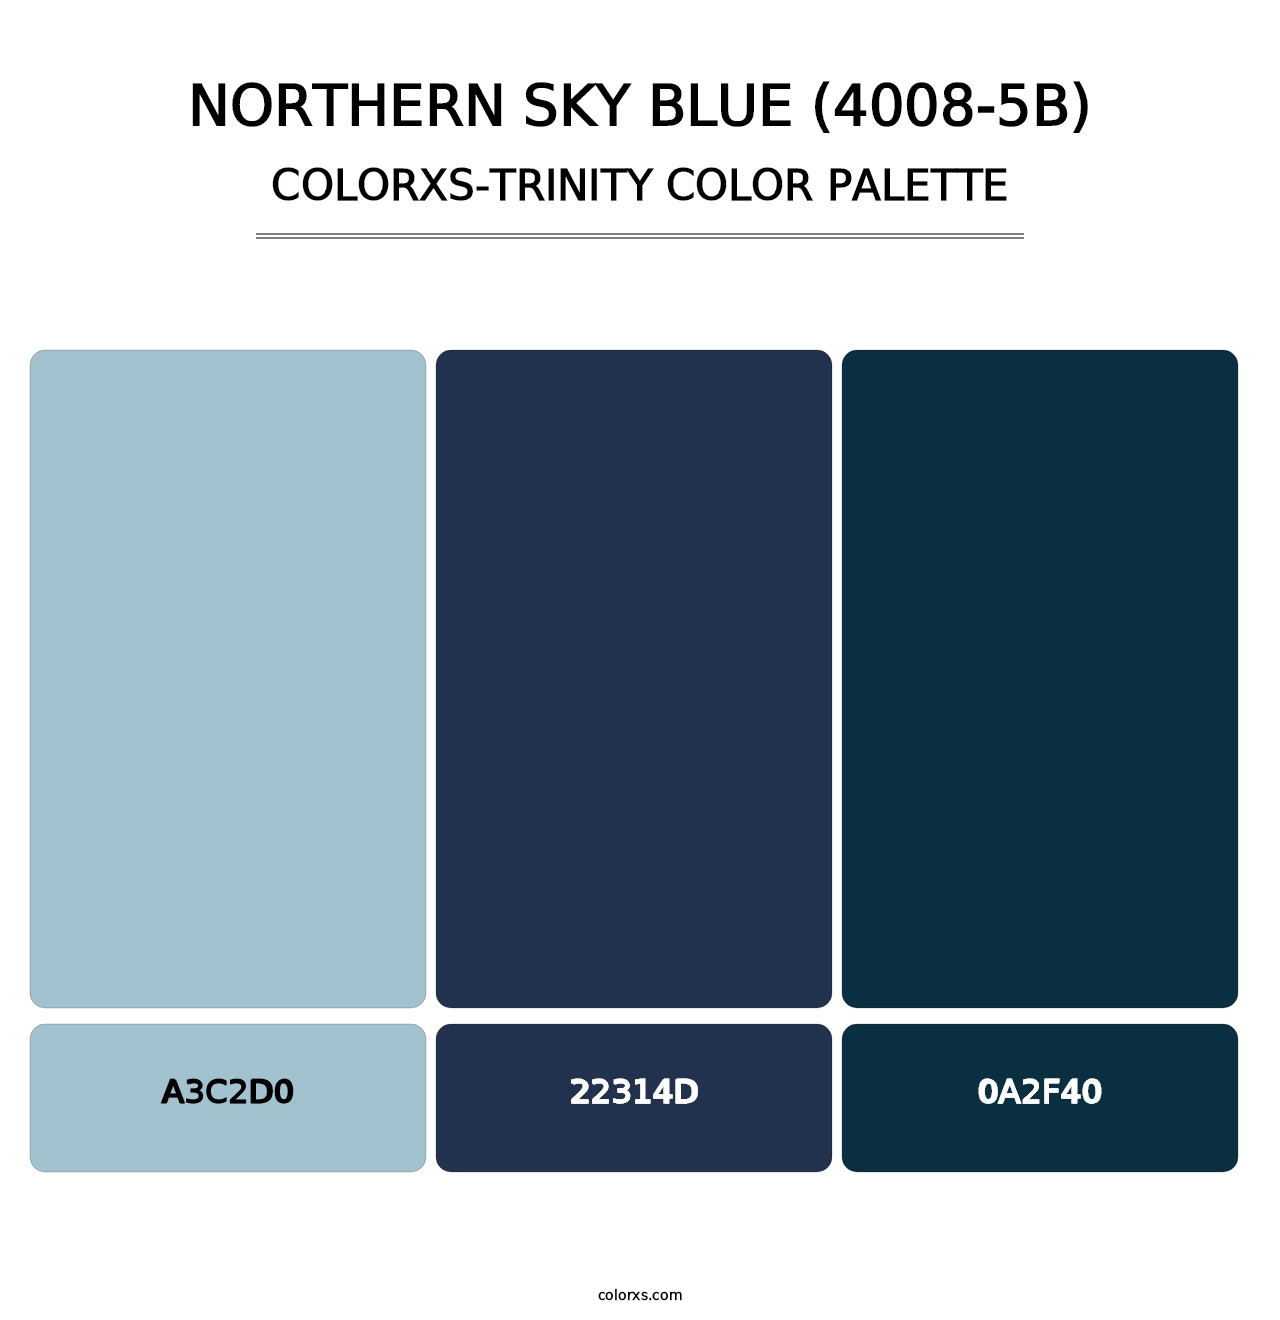 Northern Sky Blue (4008-5B) - Colorxs Trinity Palette